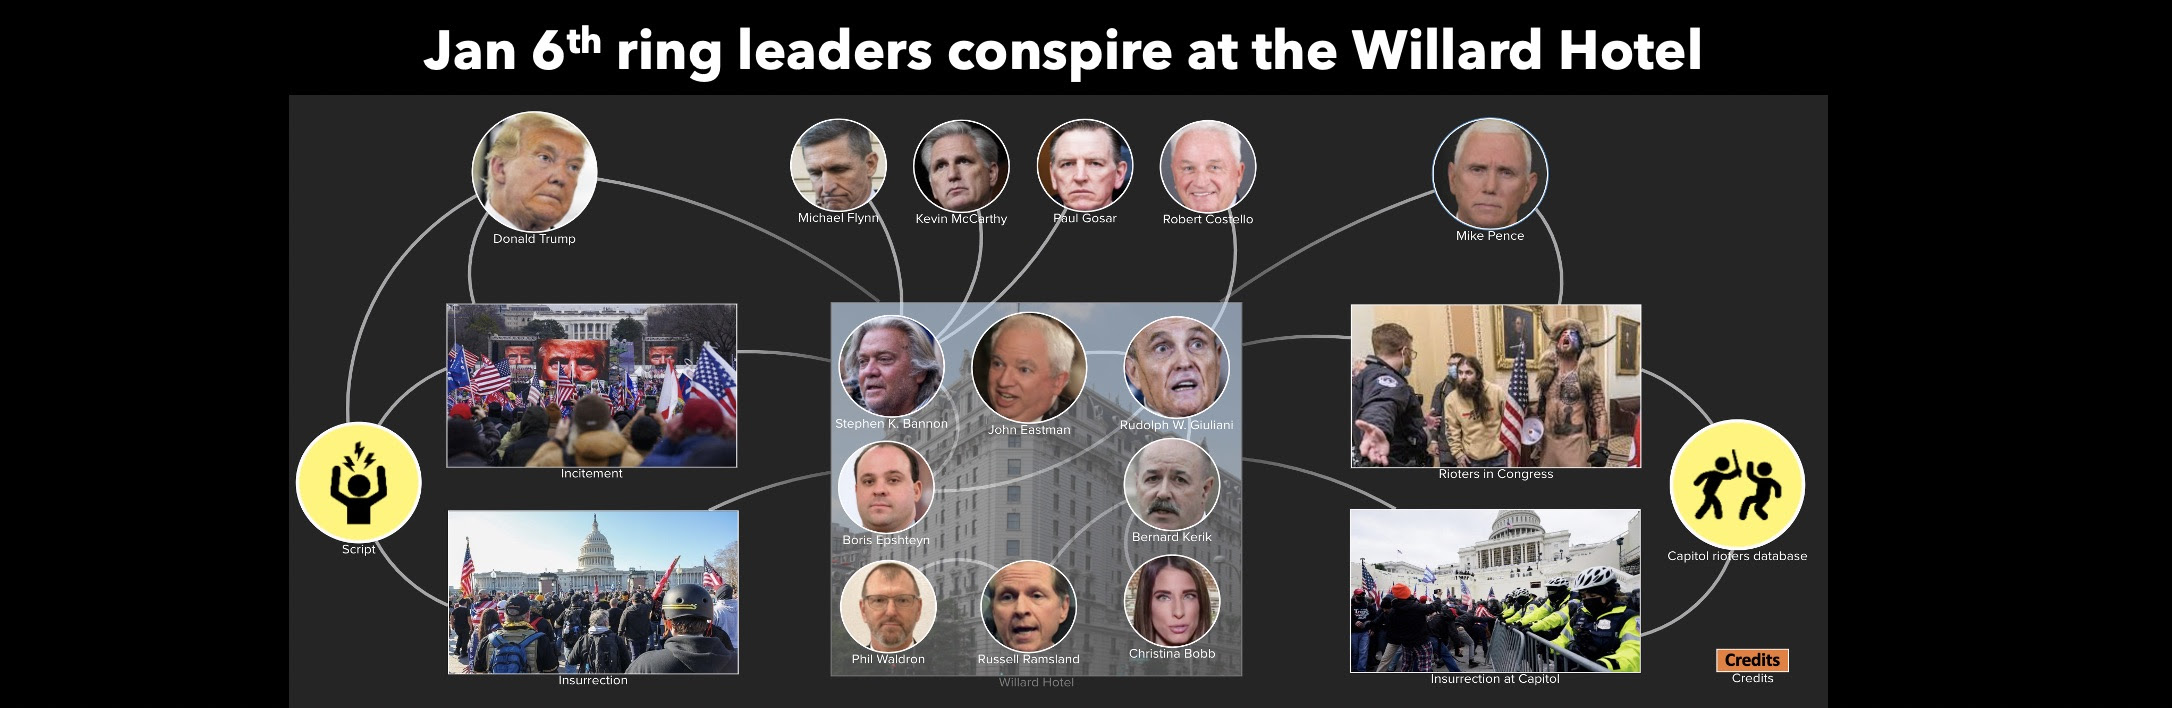 Jan 6th Capitol riot ring leaders conspire at Willard hotel